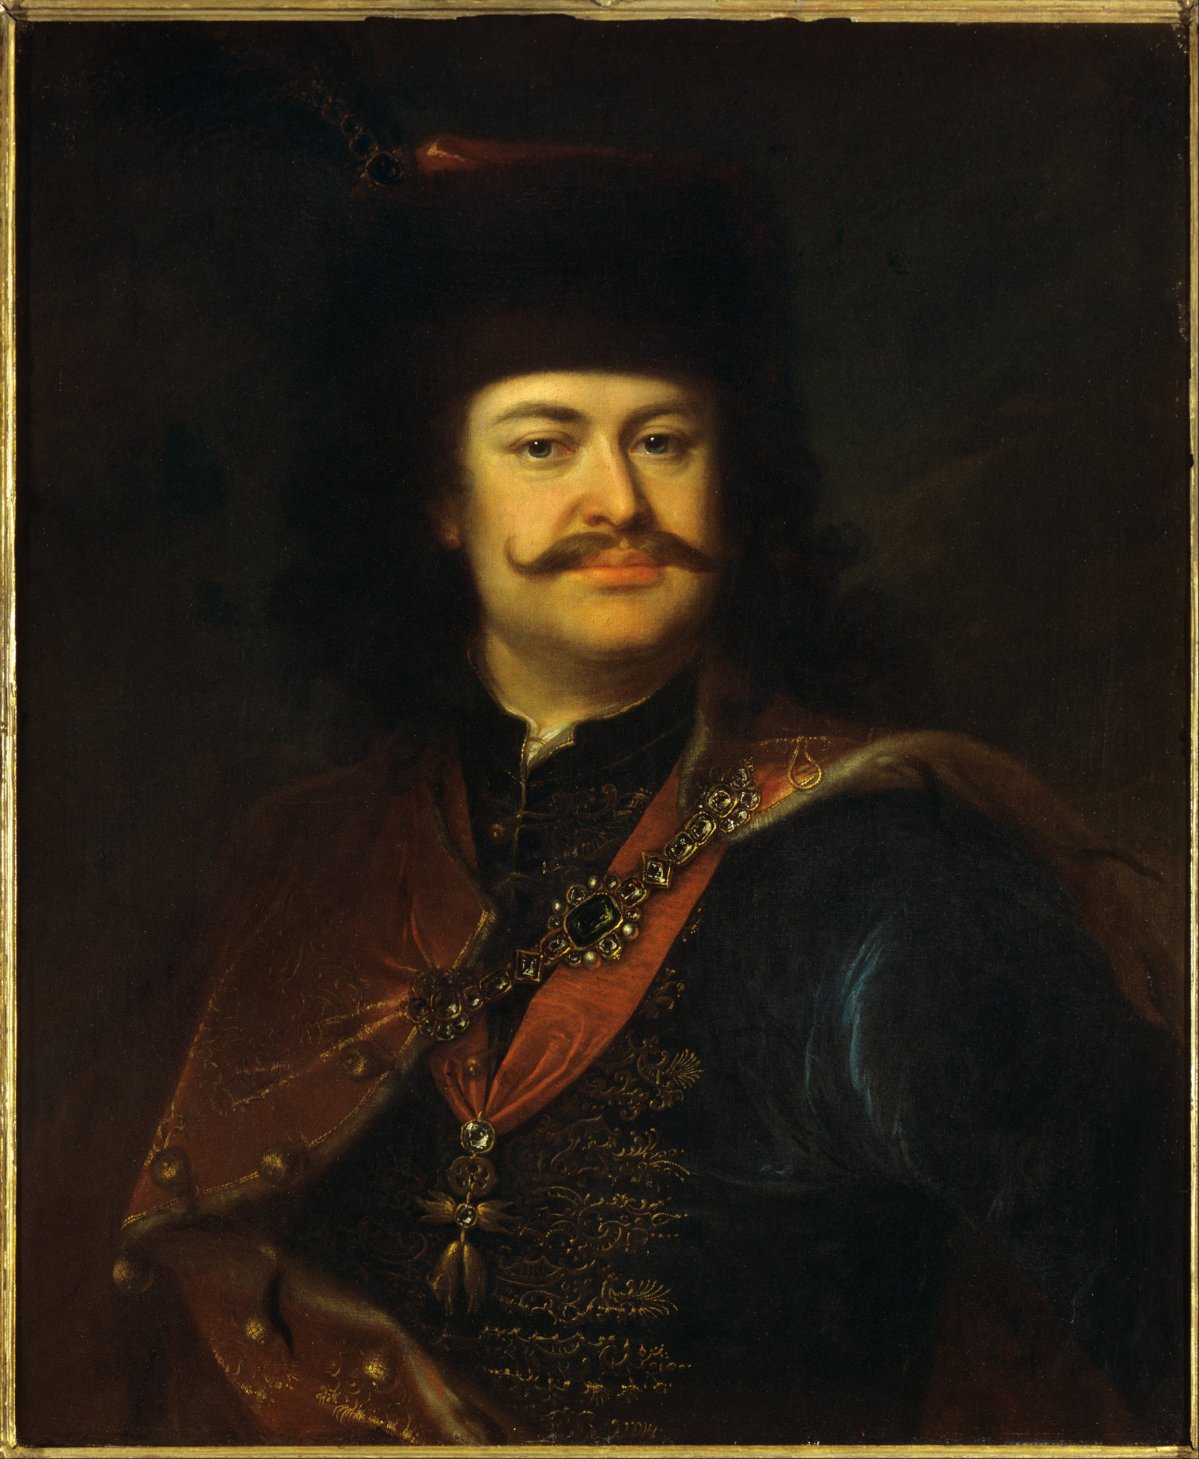 Mányoki,_Ádam_-_Portrait_of_Prince_Ferenc_Rákóczi_II_-_Google_Art_Project.jpg